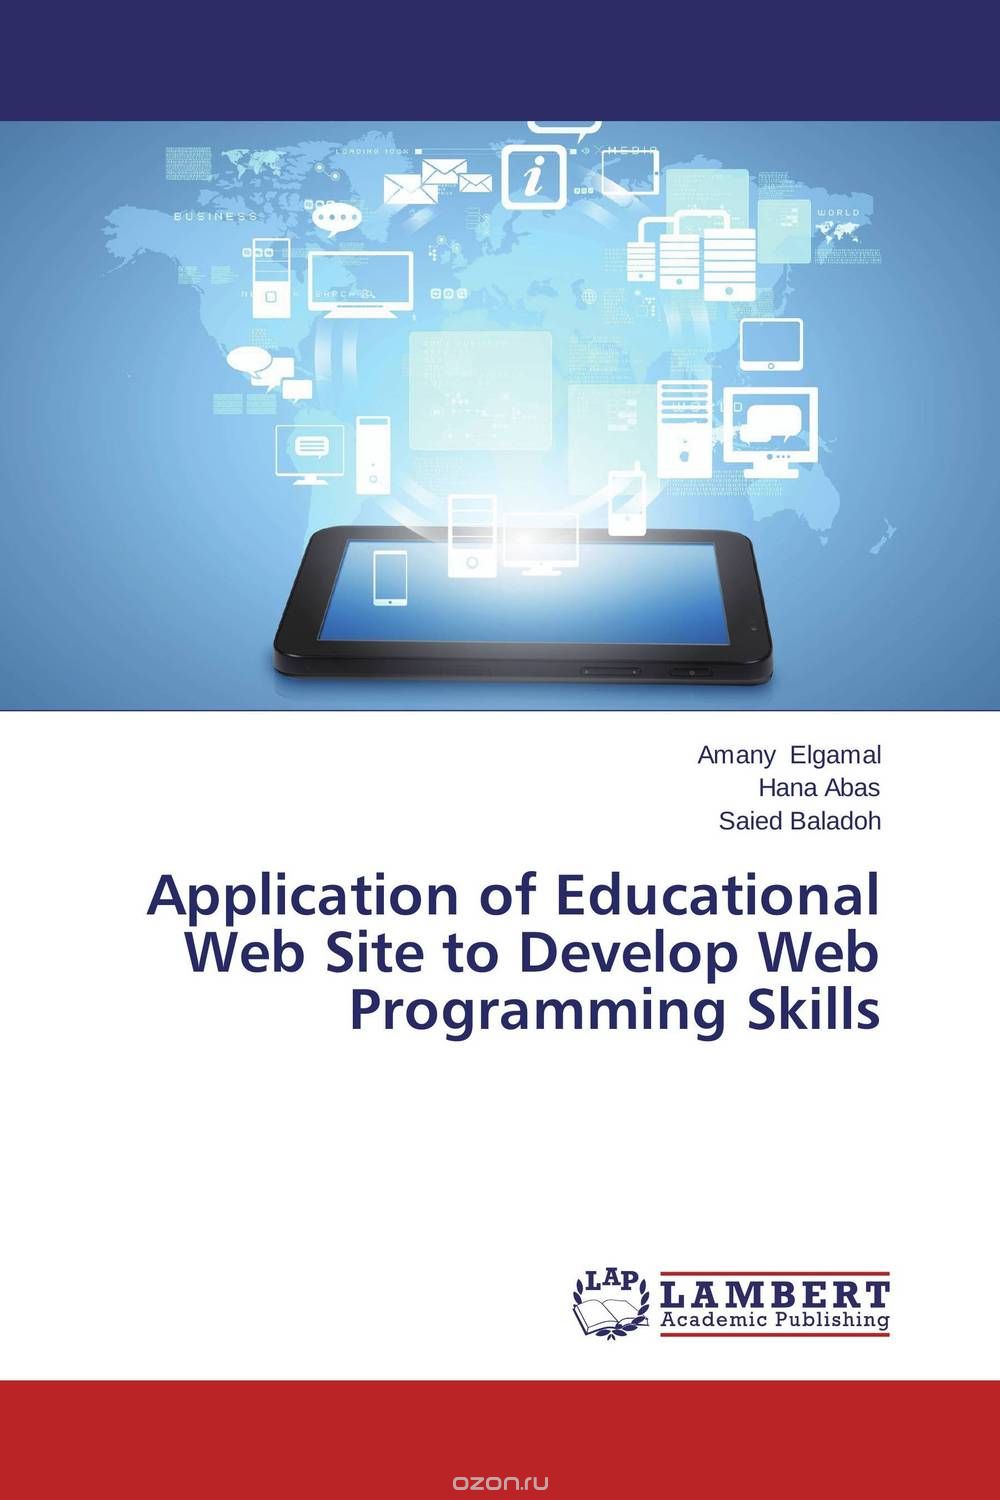 Скачать книгу "Application of Educational Web Site to Develop Web Programming Skills, Amany Elgamal,Hana Abas and Saied Baladoh"